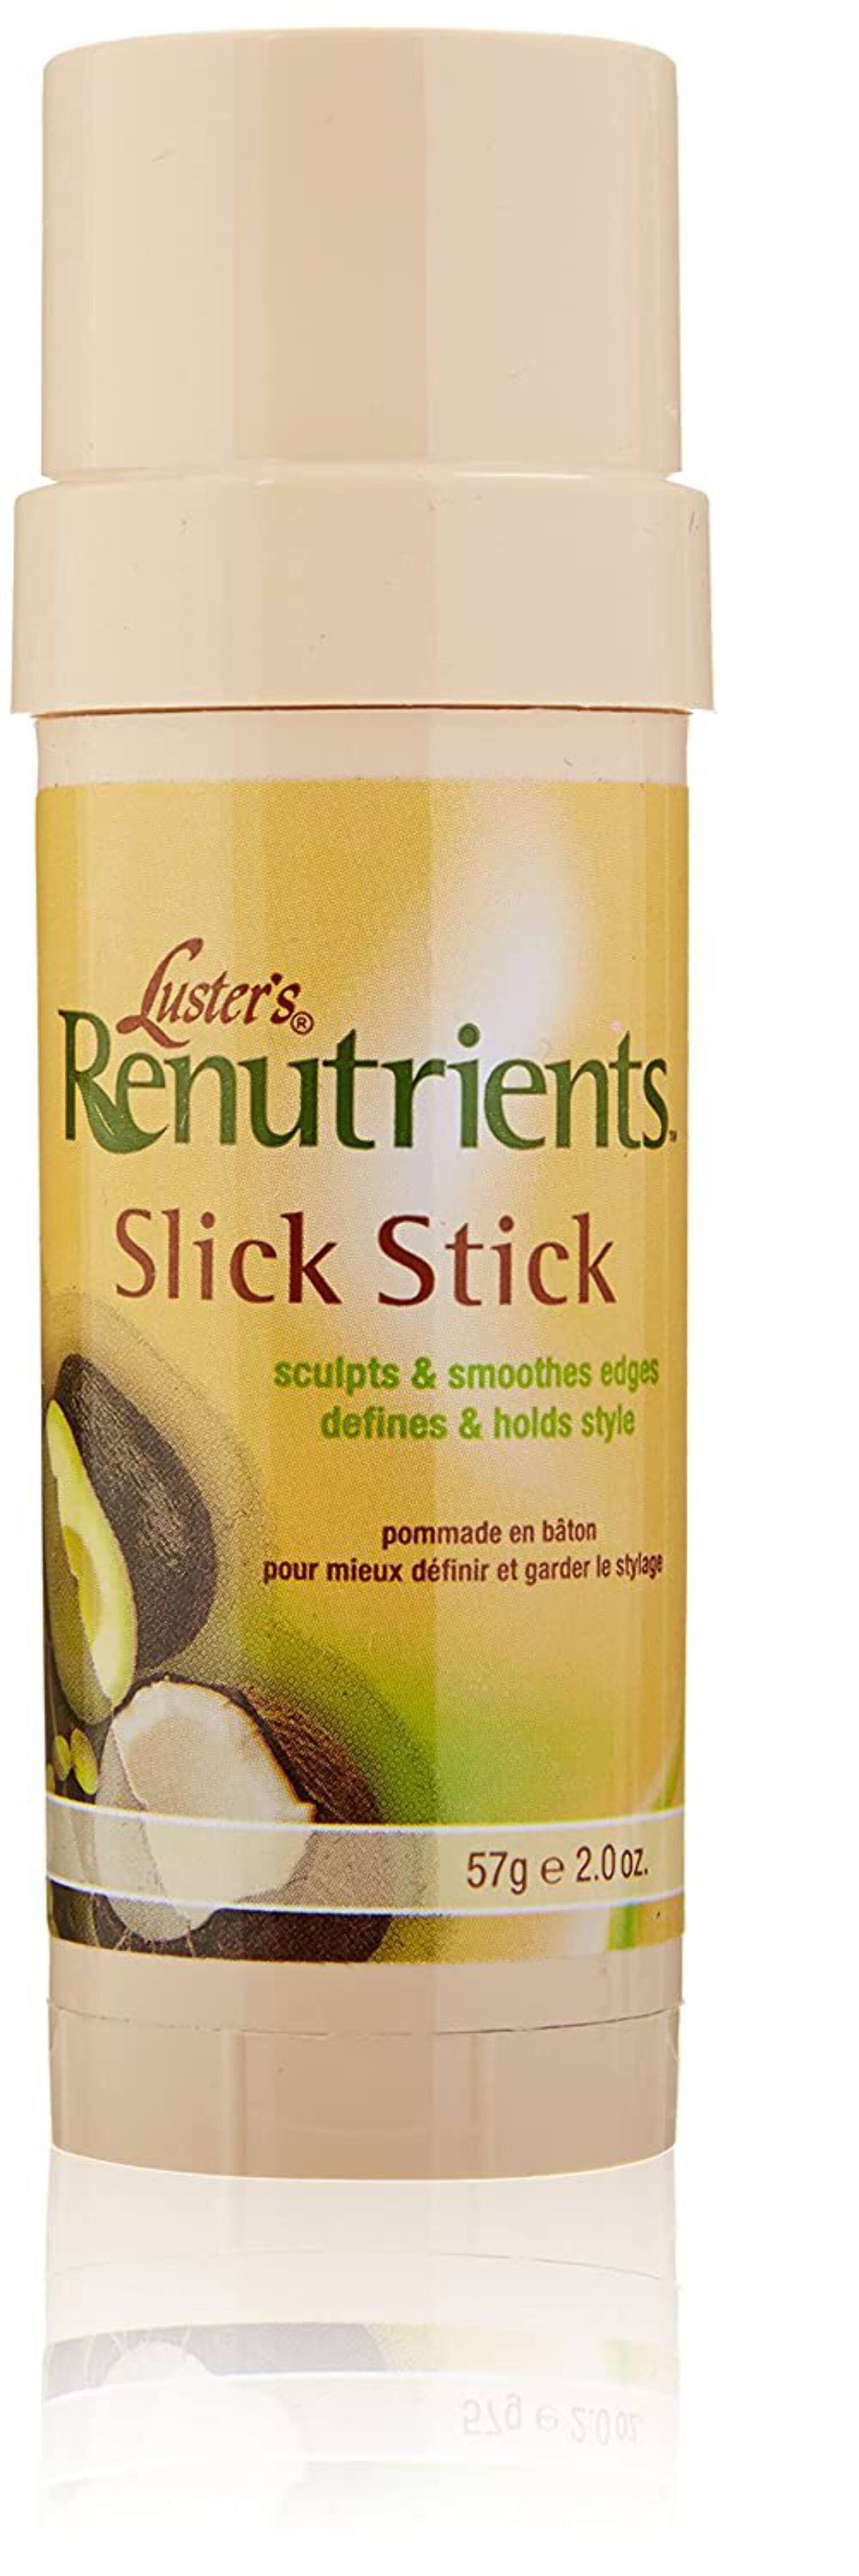 Luster's Renutrients Slick Stick - Easy Hair Maintenance | Image